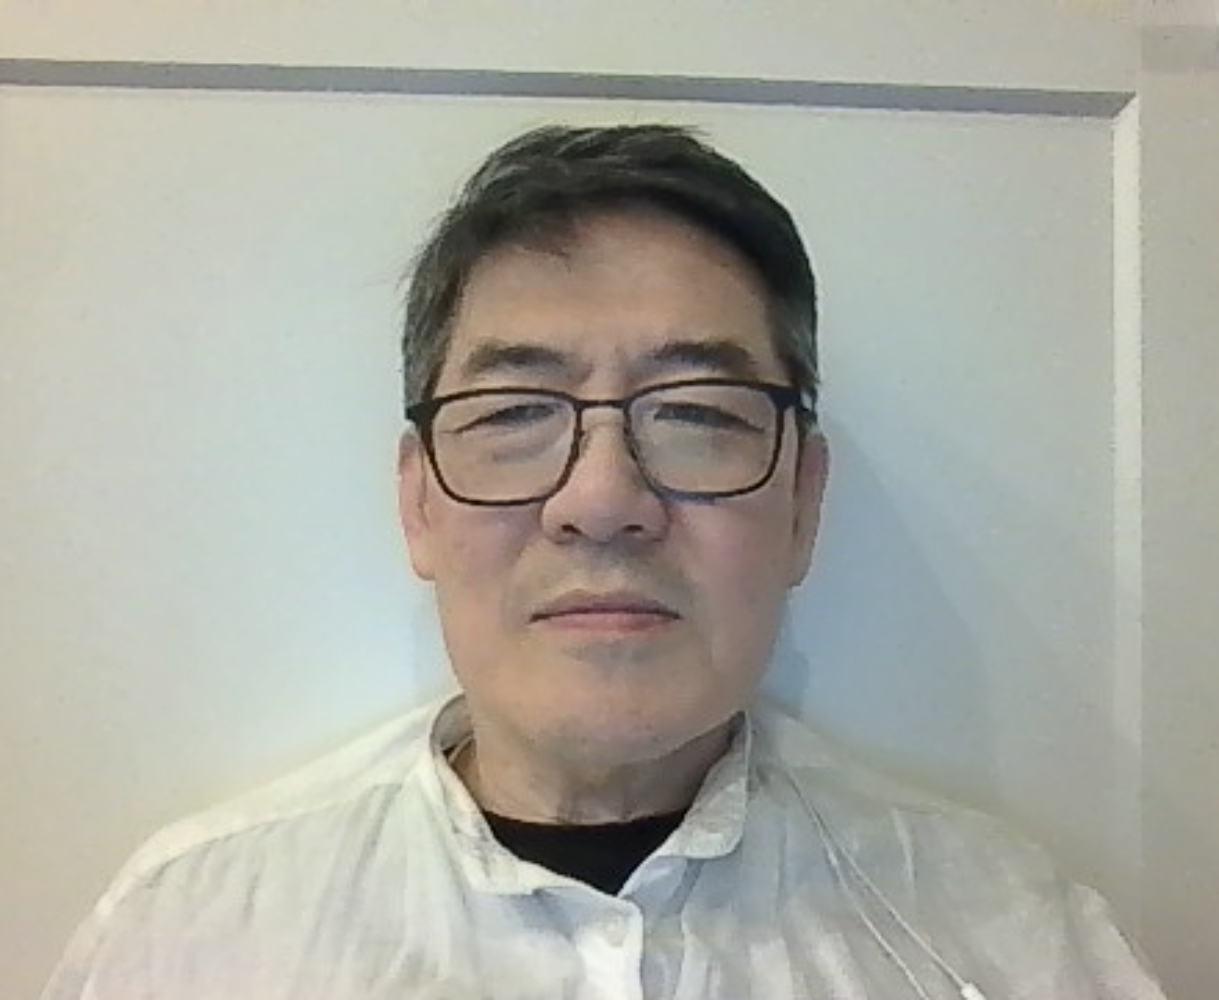 Frederick Chen